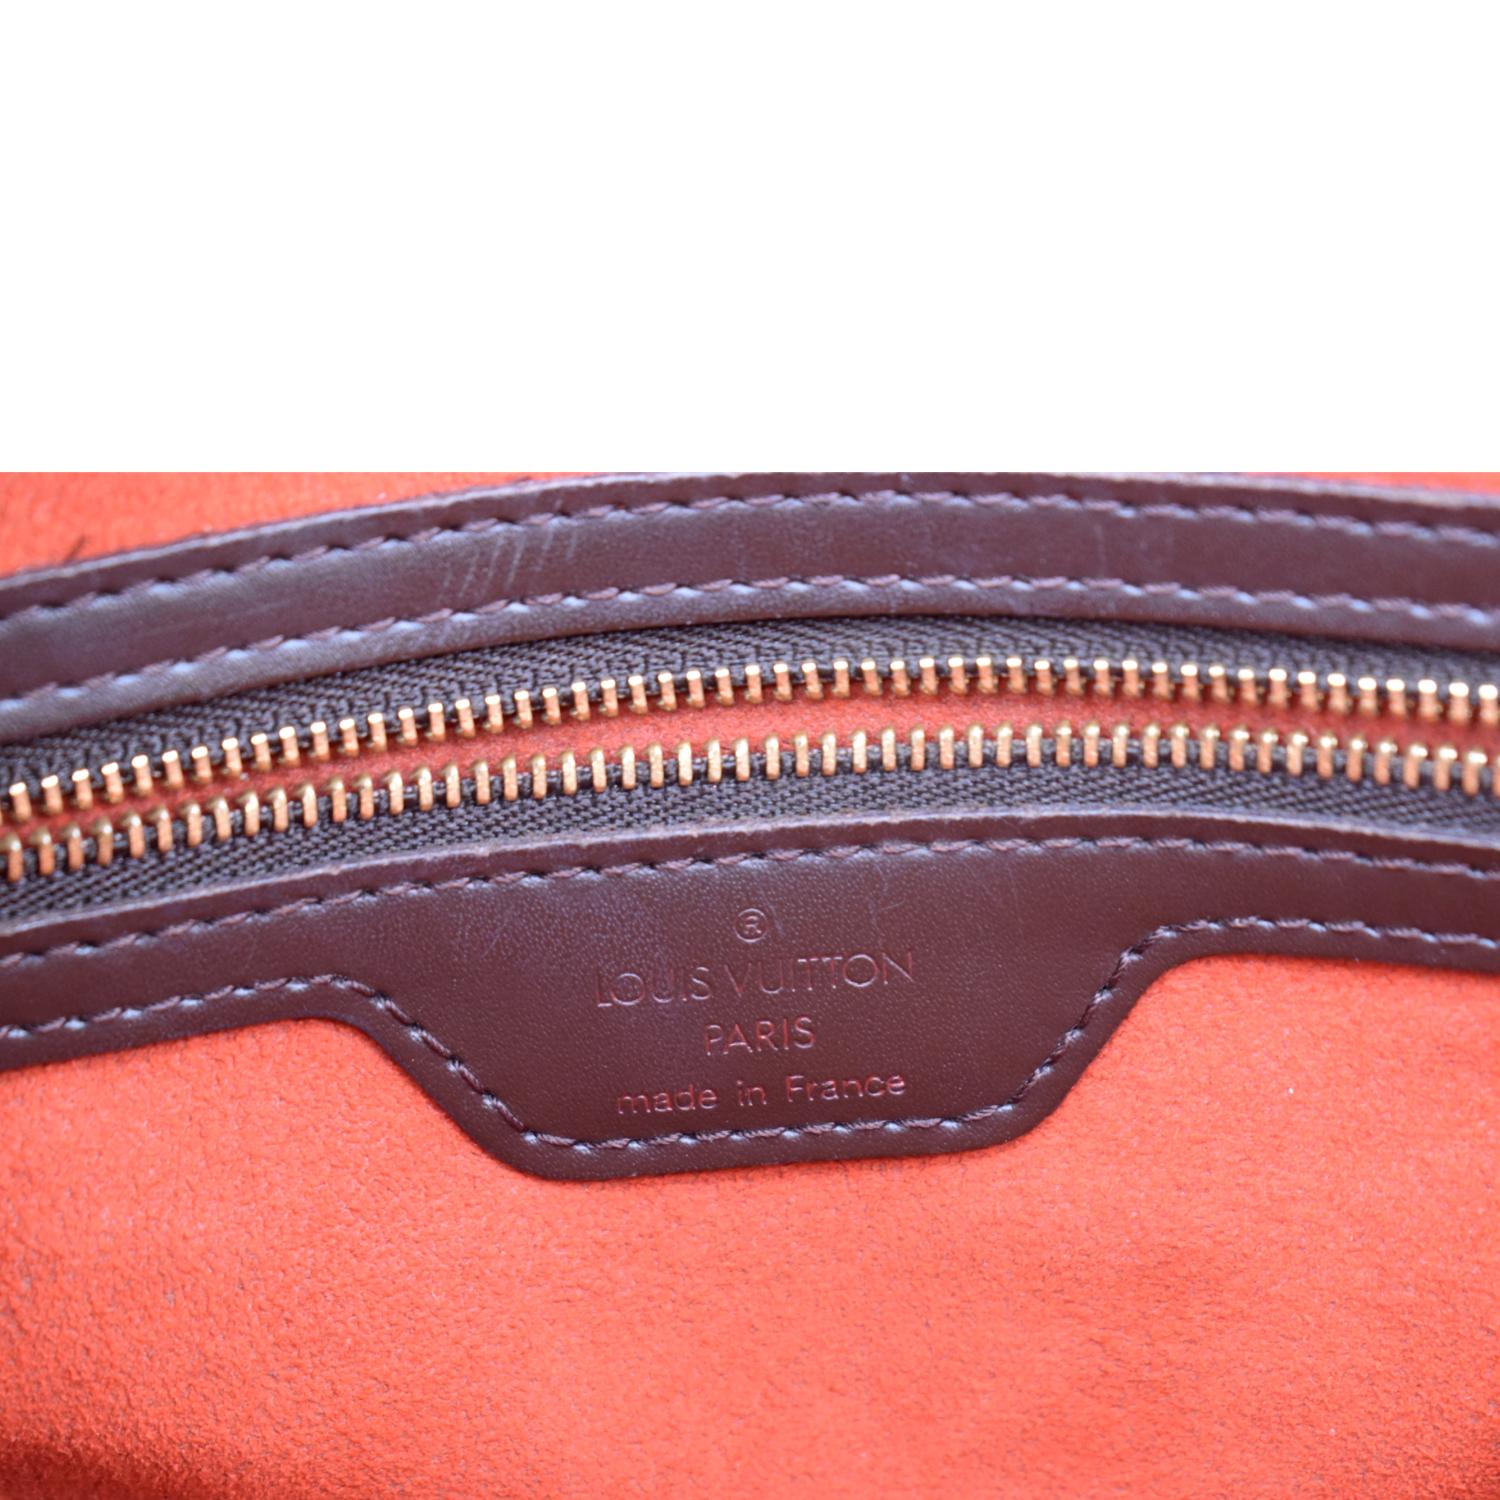 Authentic Louis Vuitton Tote Bag Sac Plat N51140 Brown Damier